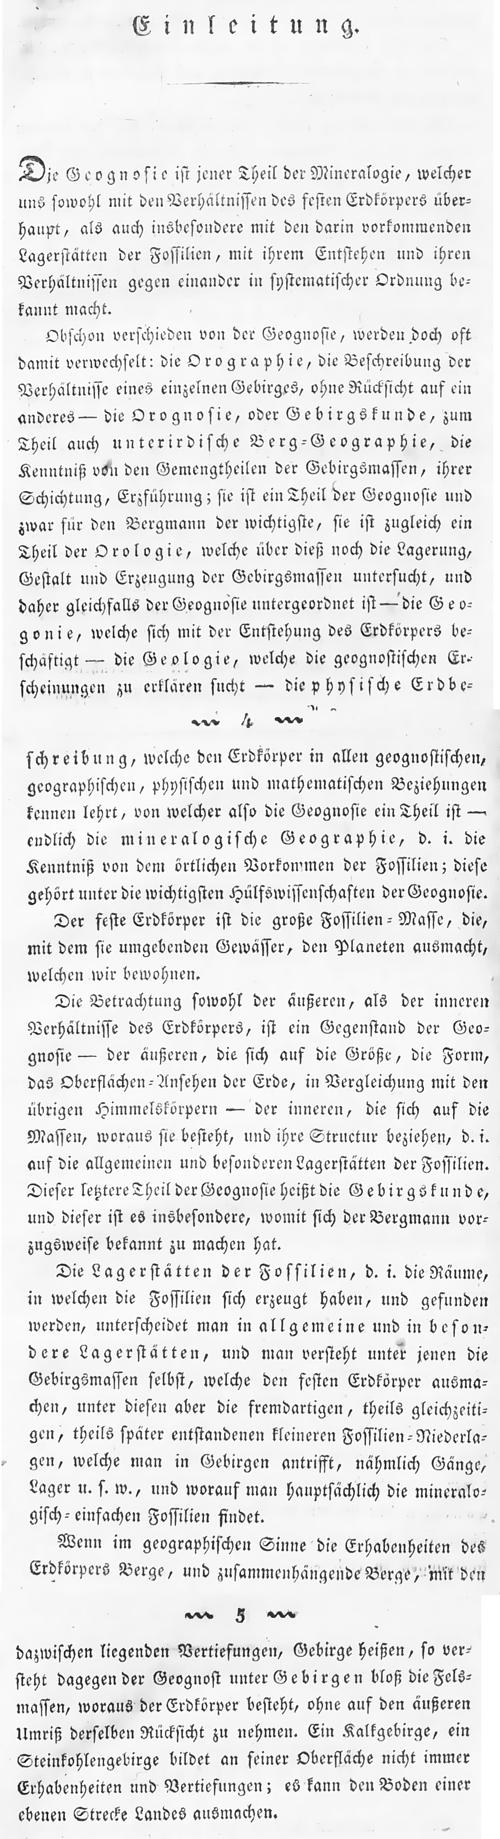 Reichetzer Texto geología y geognosia